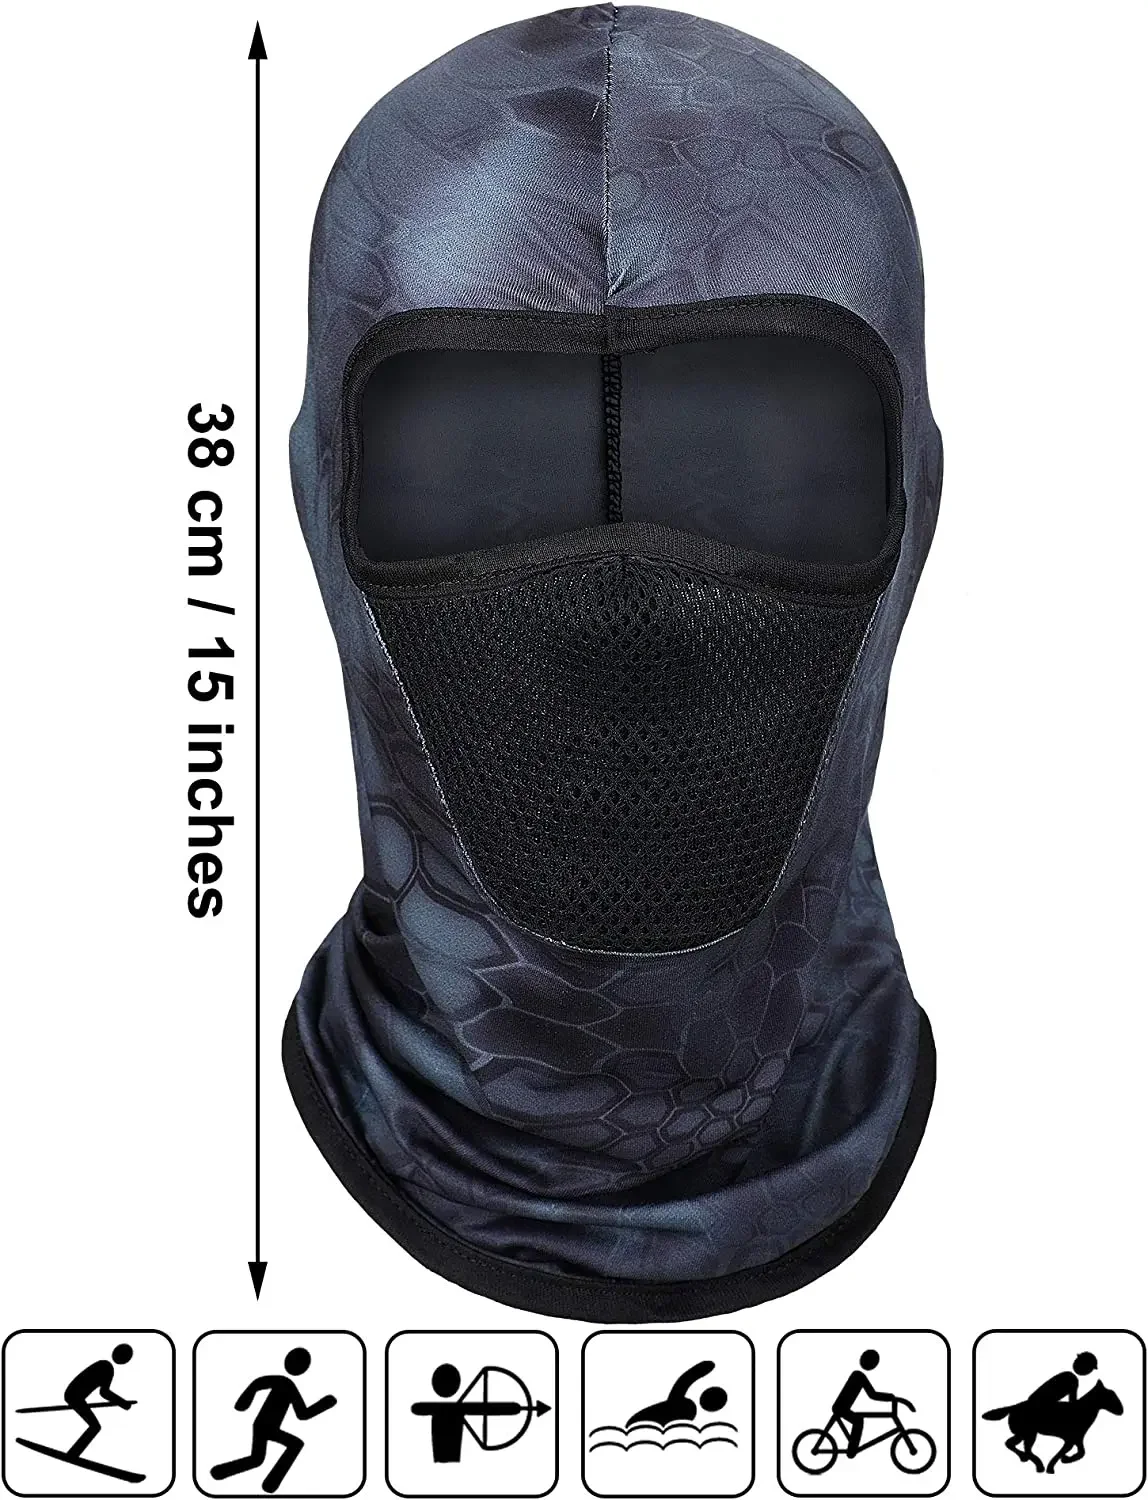 Passamontagna maschera per il viso passamontagna da uomo copertura per il viso protezione UV coperture per il viso integrale passamontagna invernale Unisex